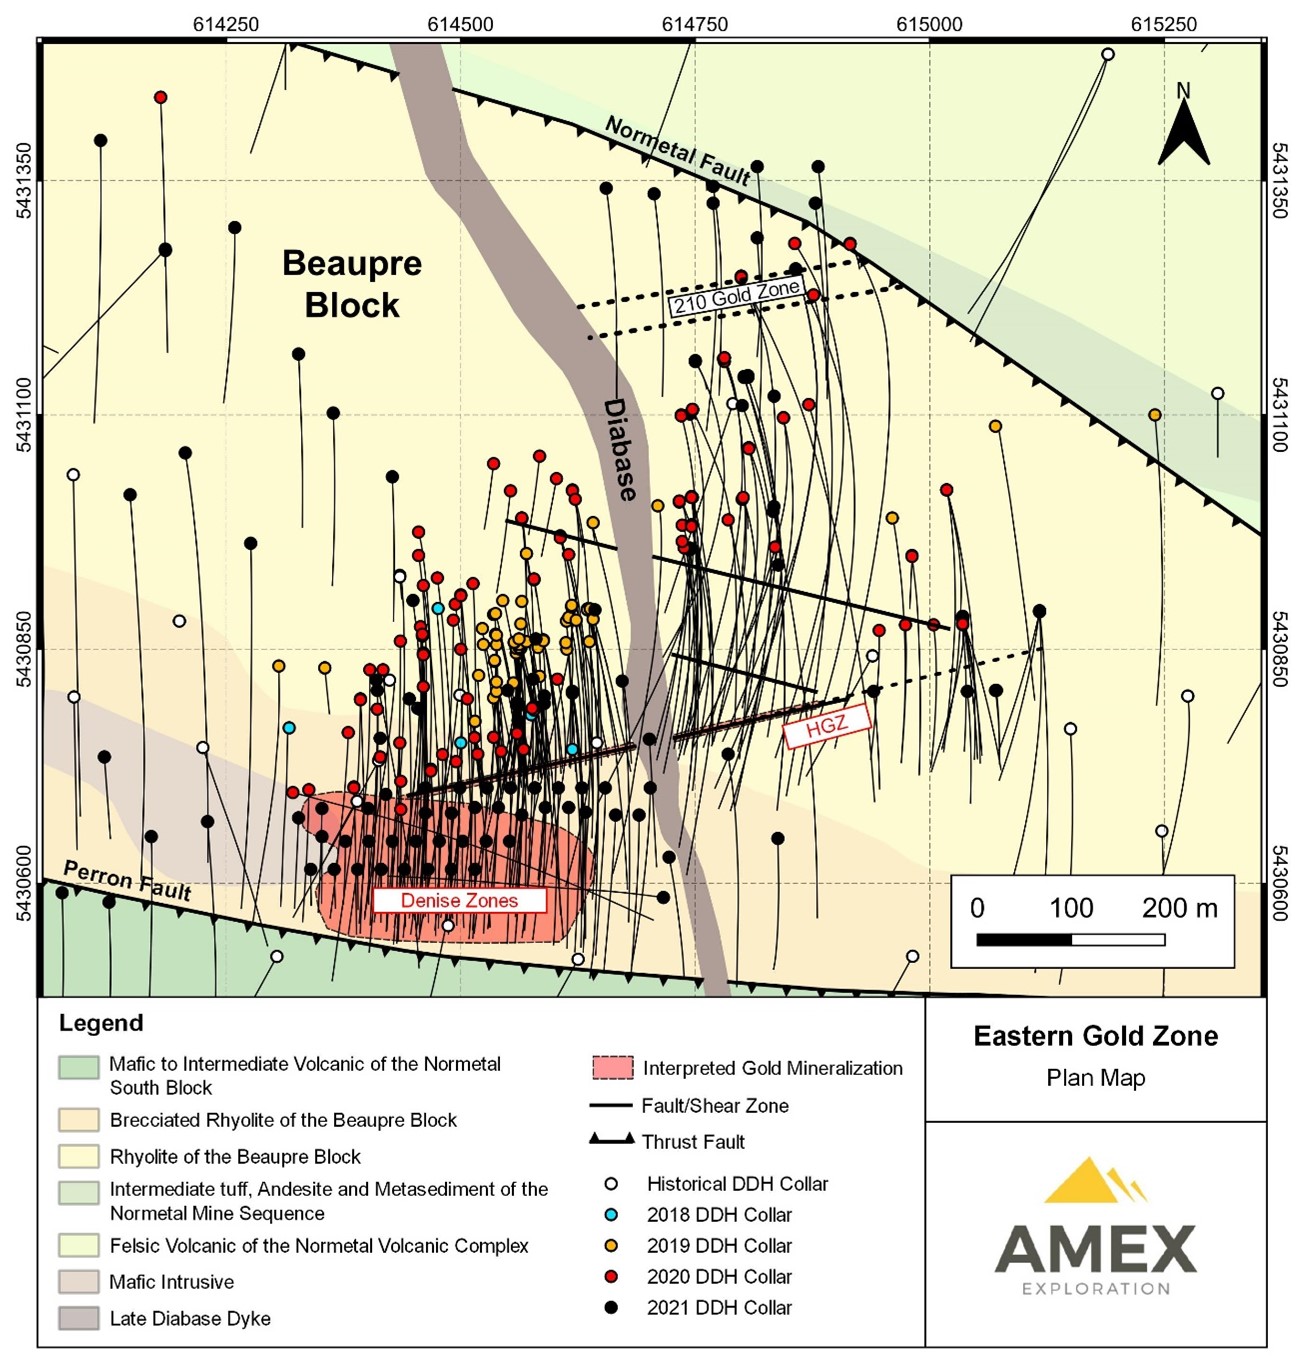 Amex Exploration Inc., Monday, June 7, 2021, Press release picture